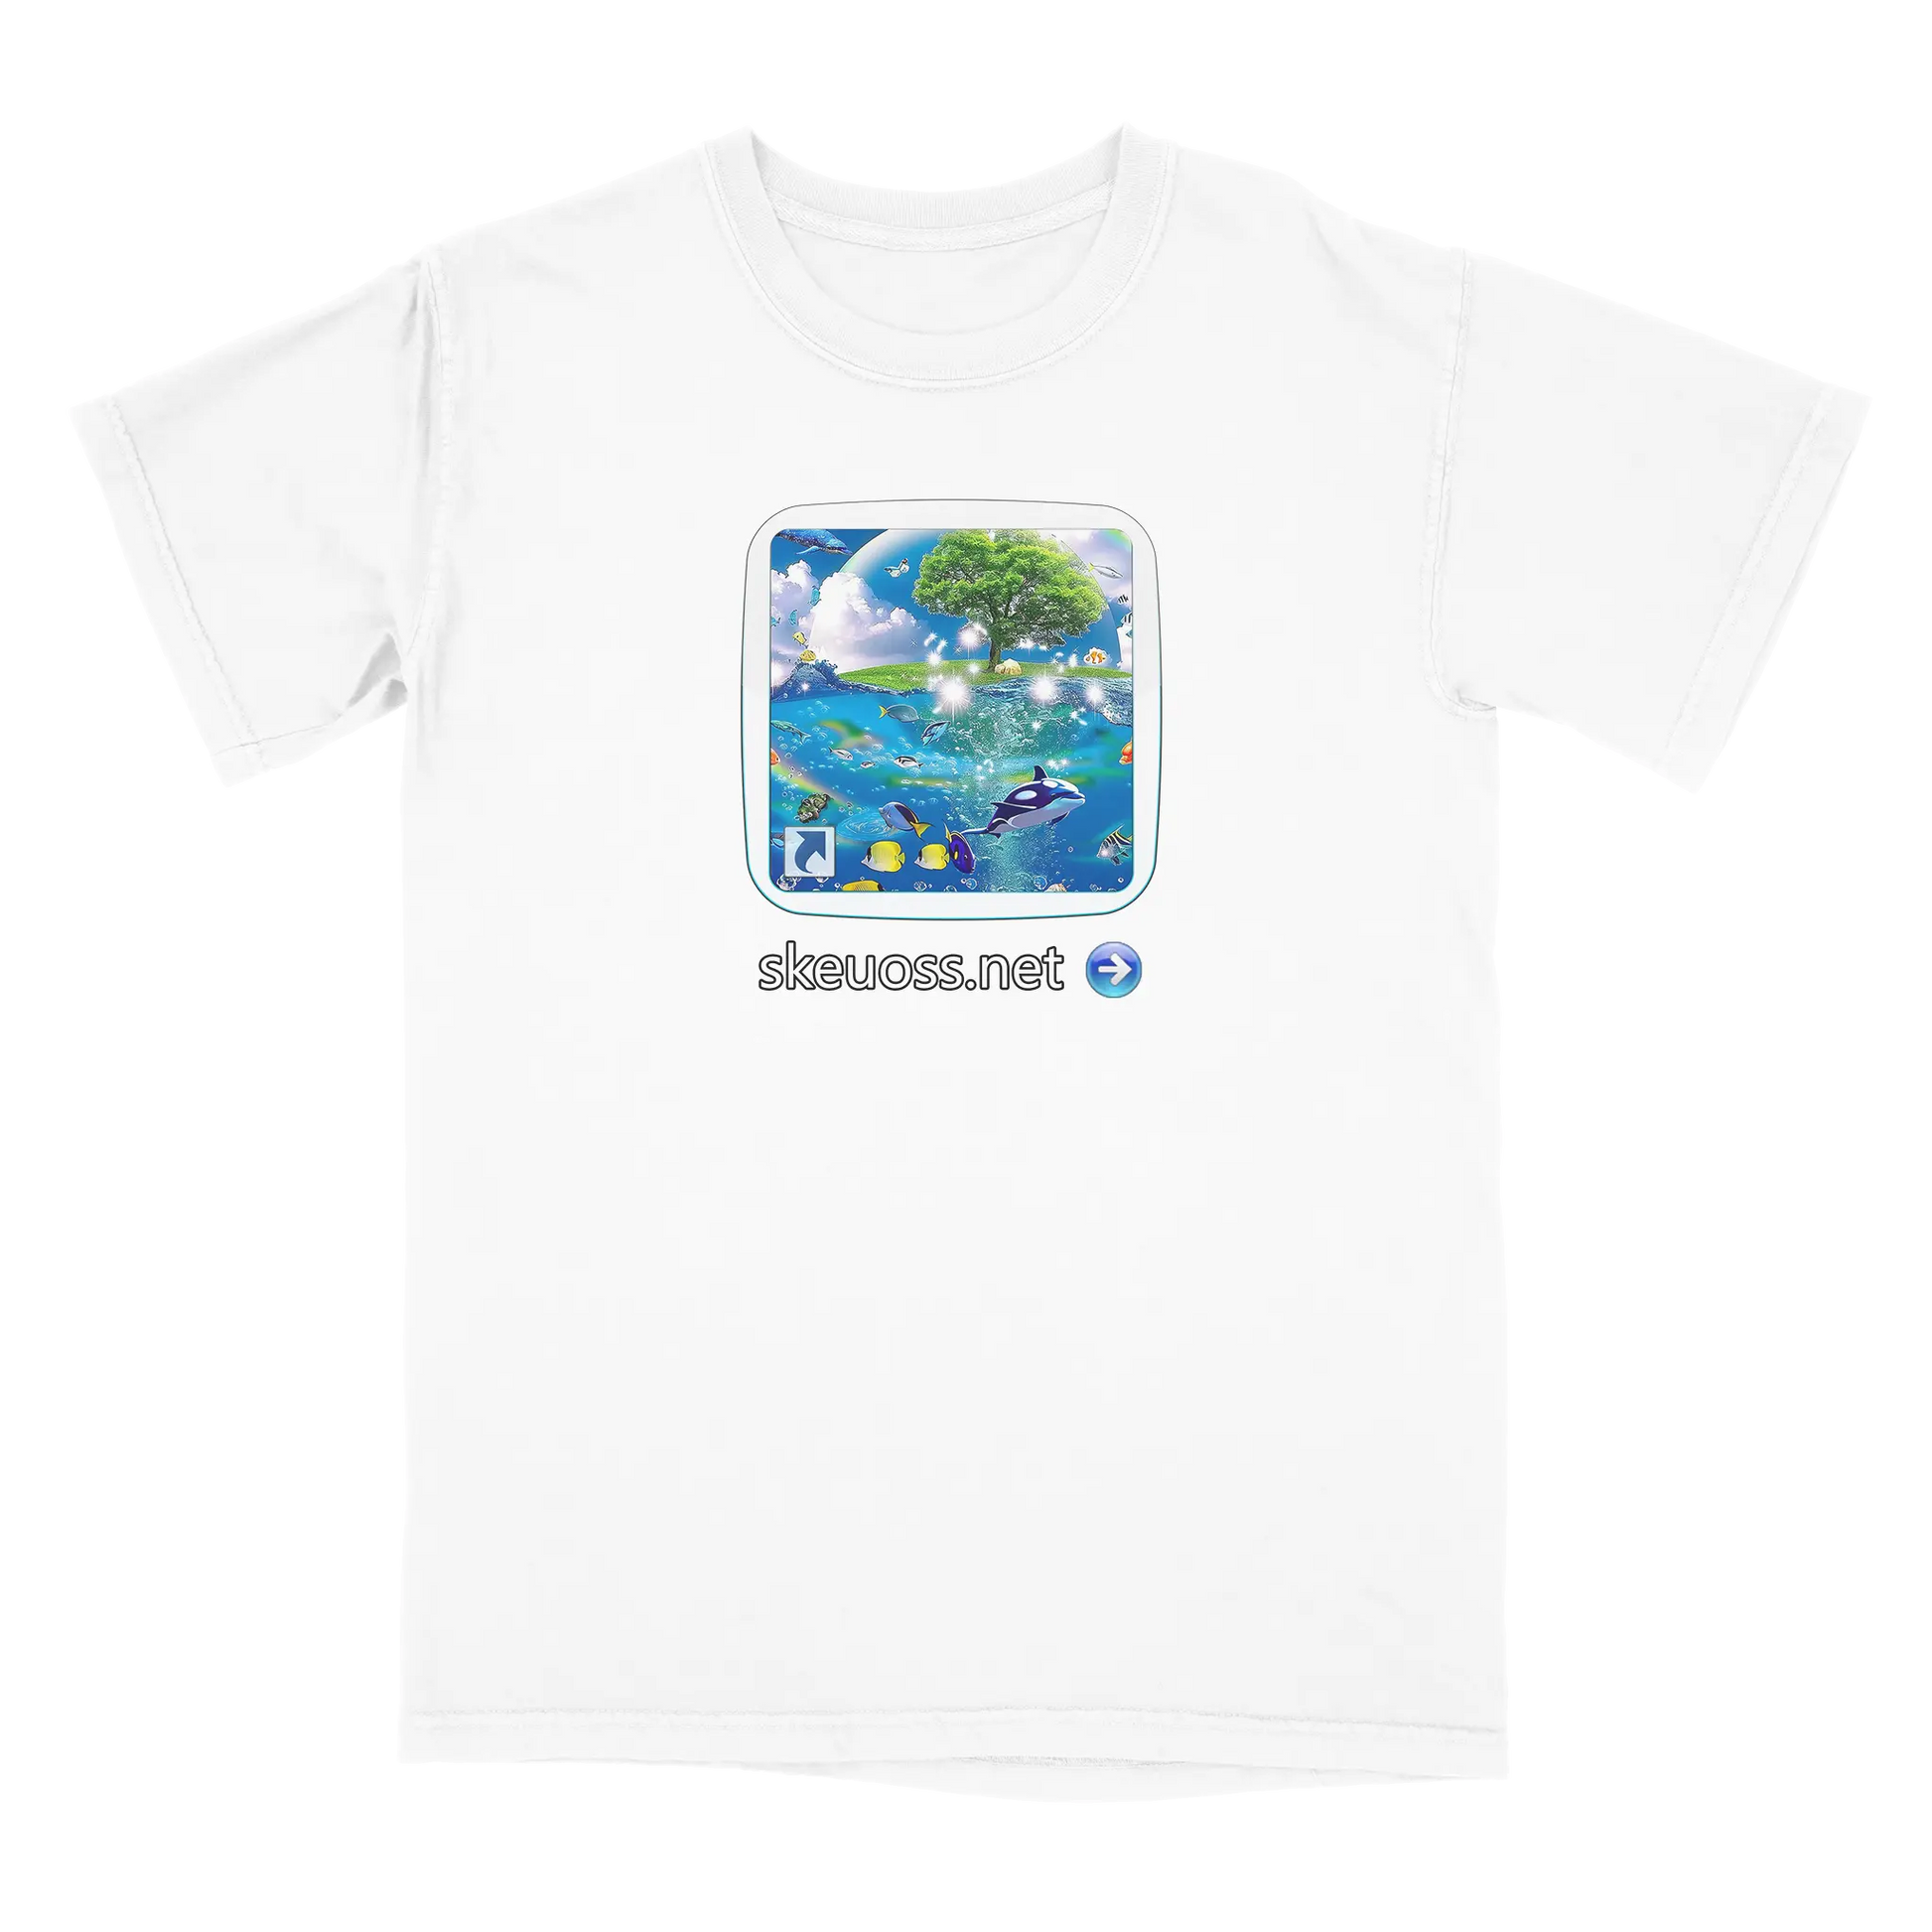 Frutiger Aero T-shirt - User Login Collection - User 301